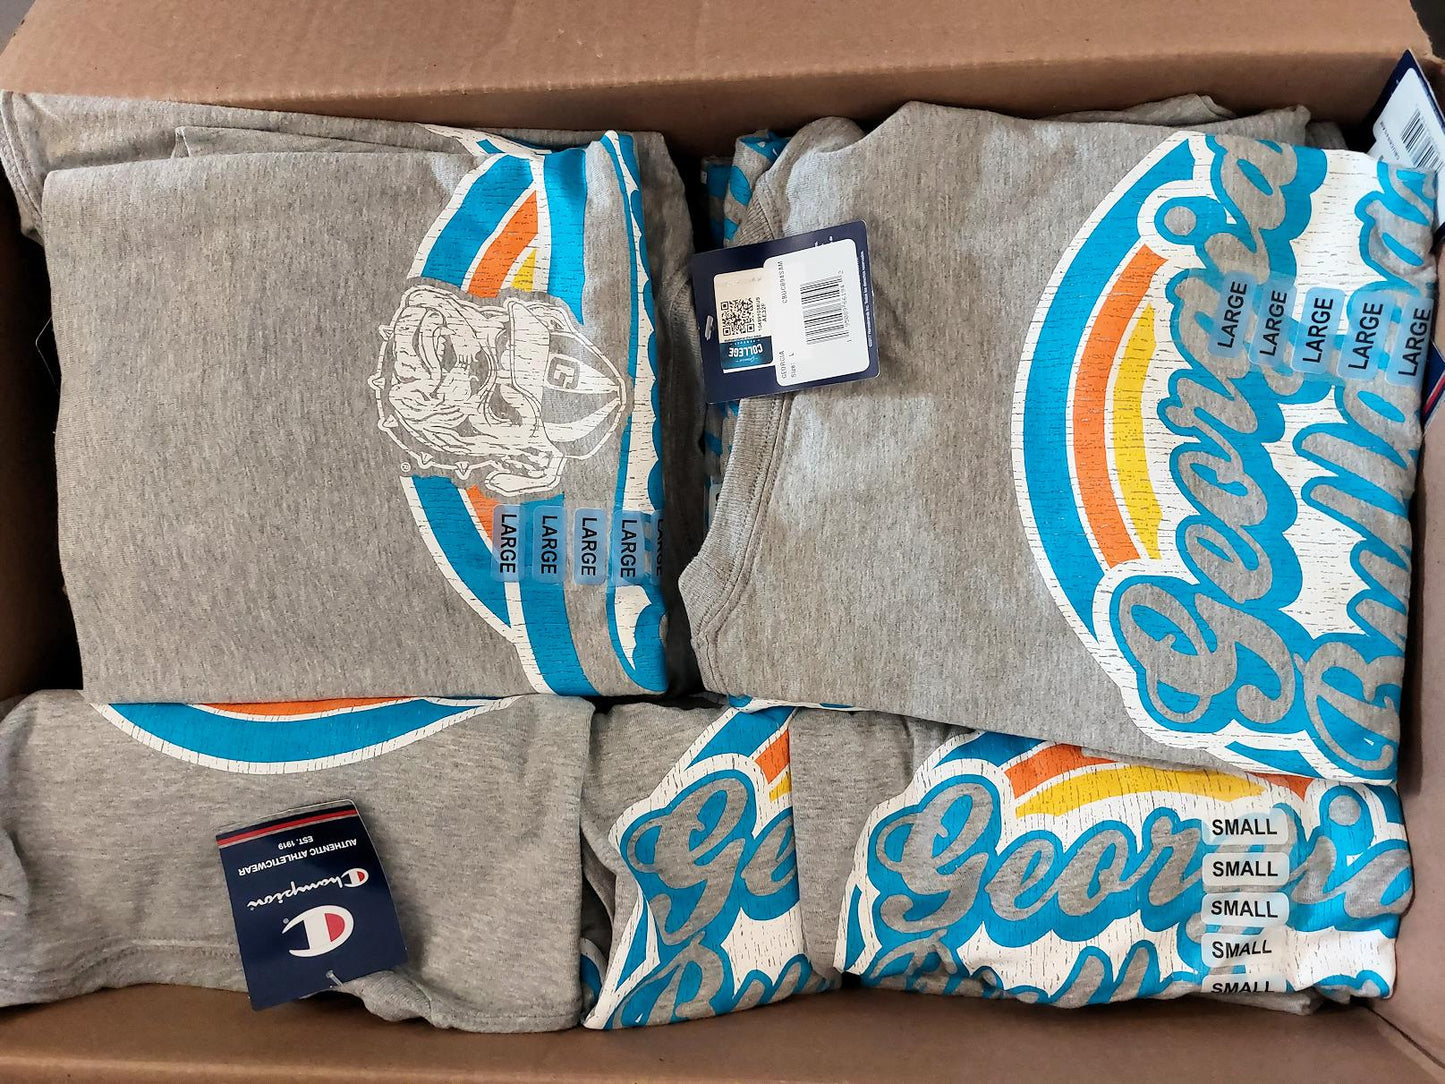 Wholesale Lot of Champion Georgia Bulldogs T-Shirts Tees College Team Apparel Brand New